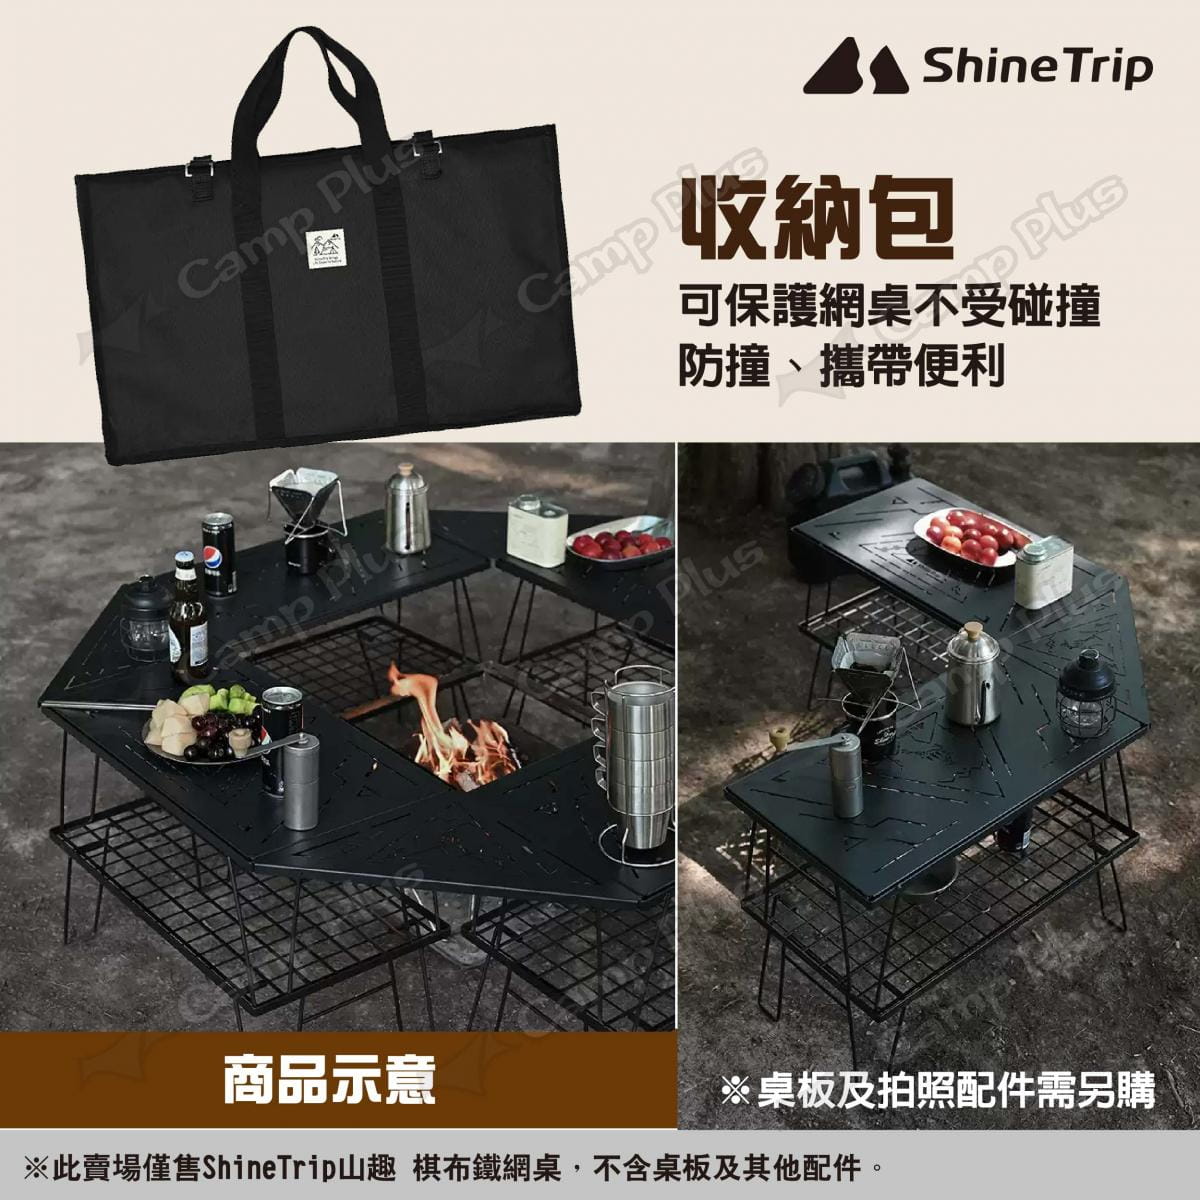 【ShineTrip山趣】棋布鐵網桌兩套裝 黑色 悠遊戶外 5